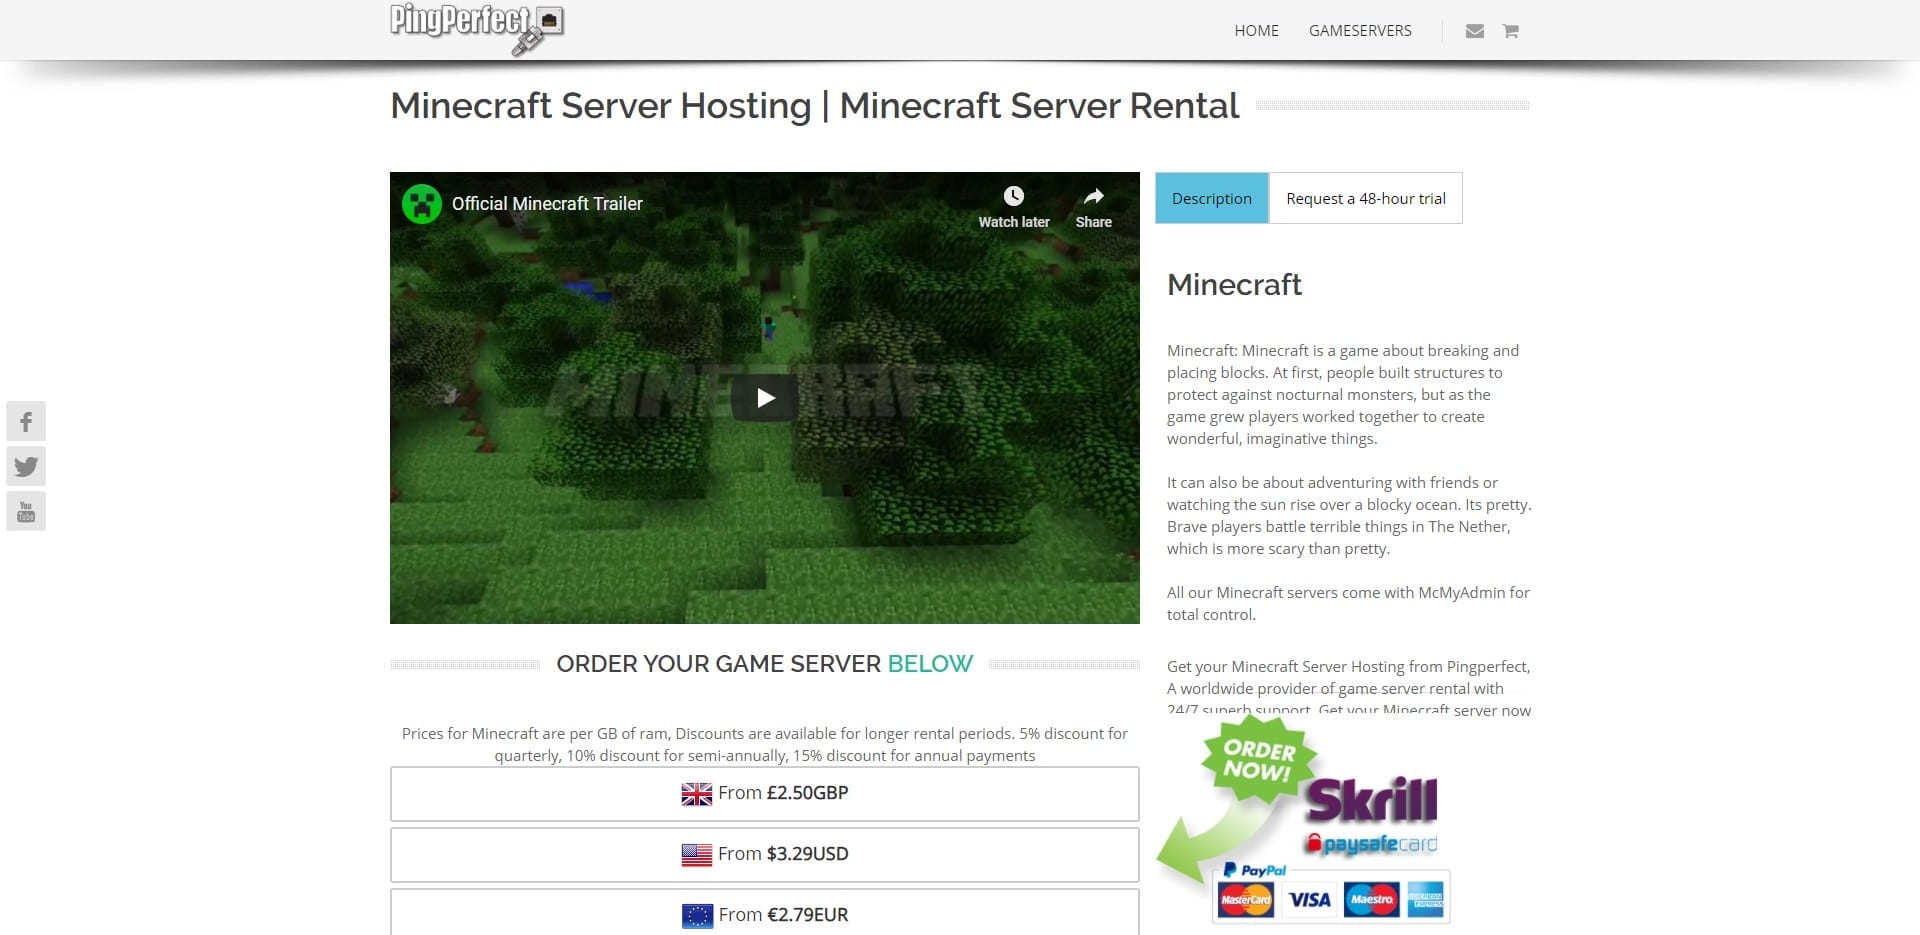 PingPerfect Minecraft Server Hosting